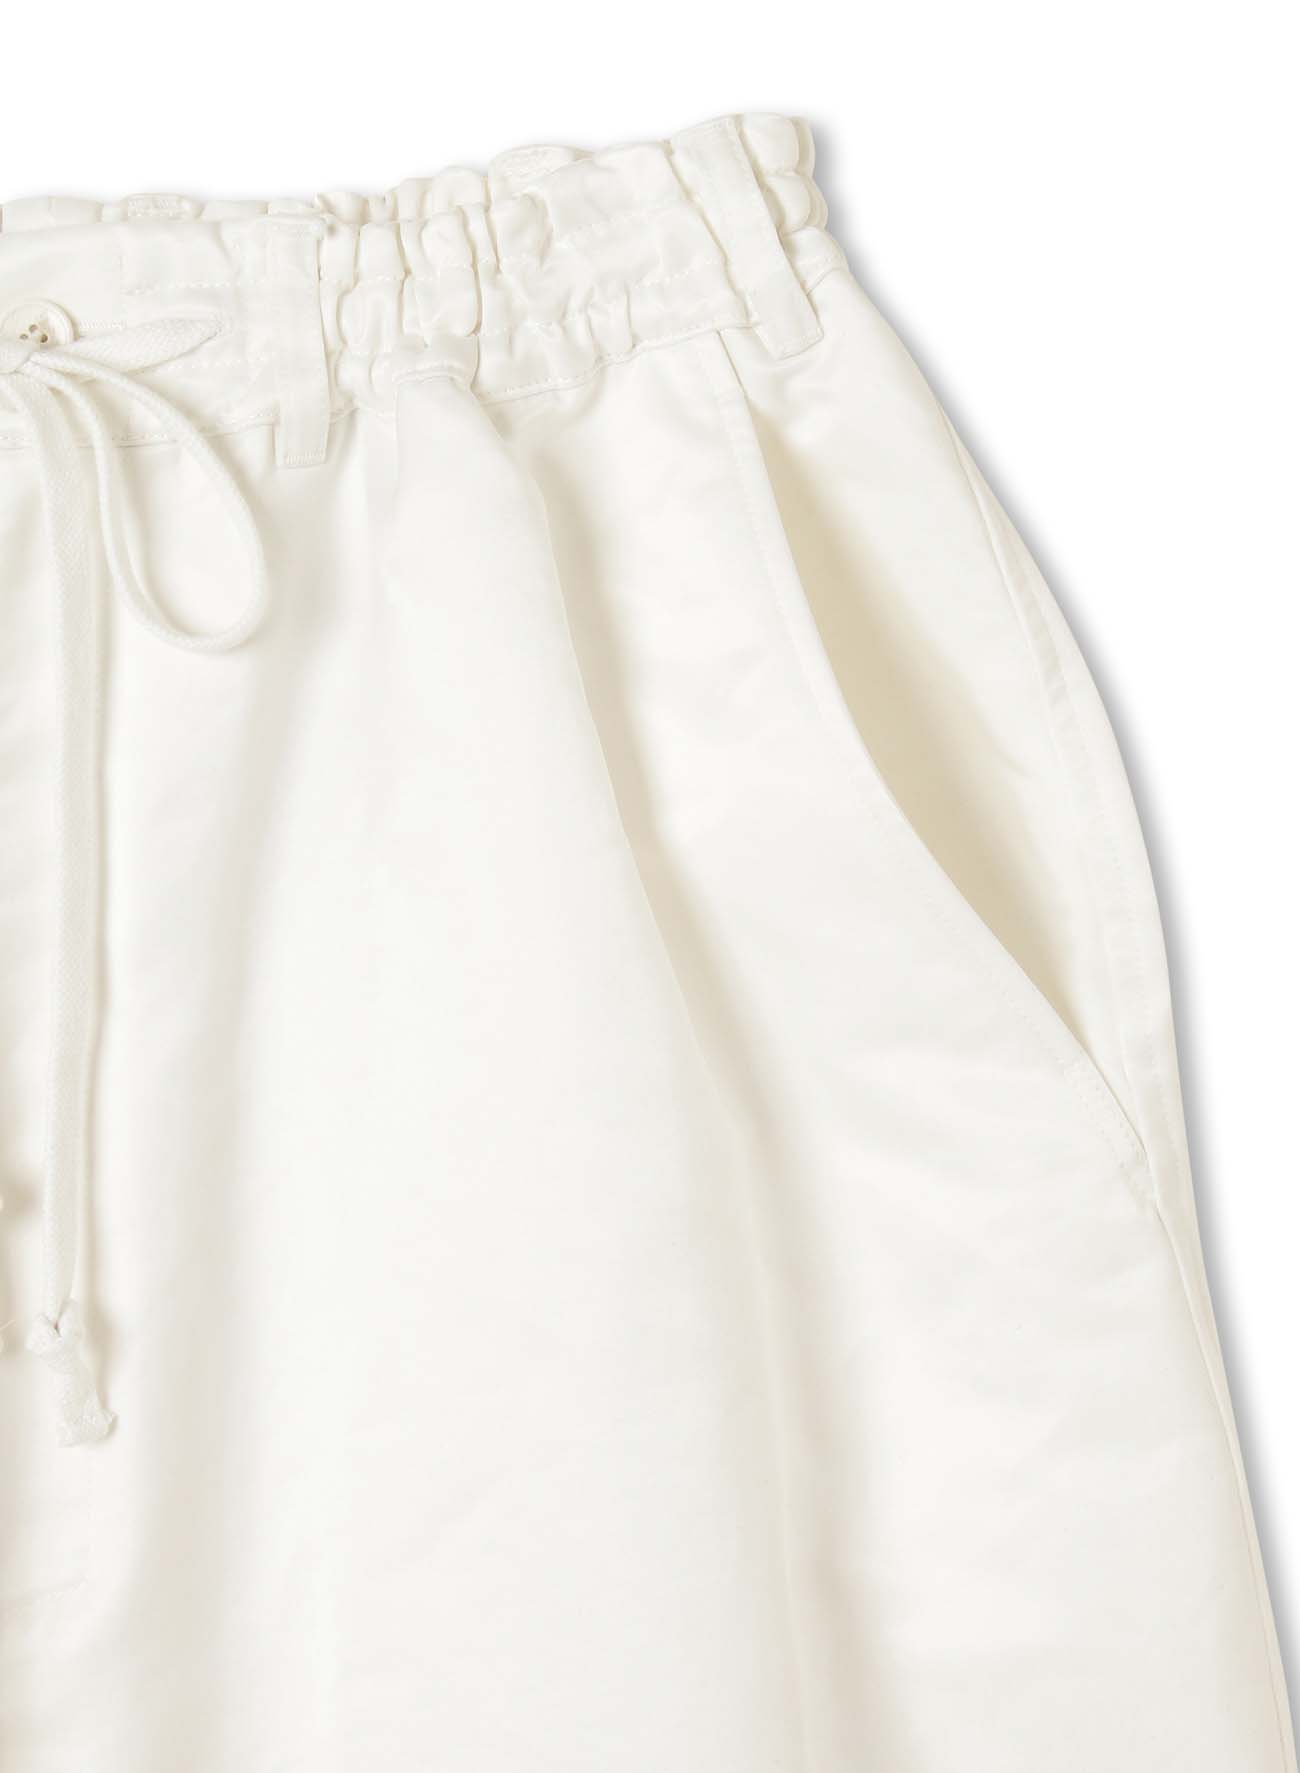 Cotton/Nylon twill combination Deformed short pants